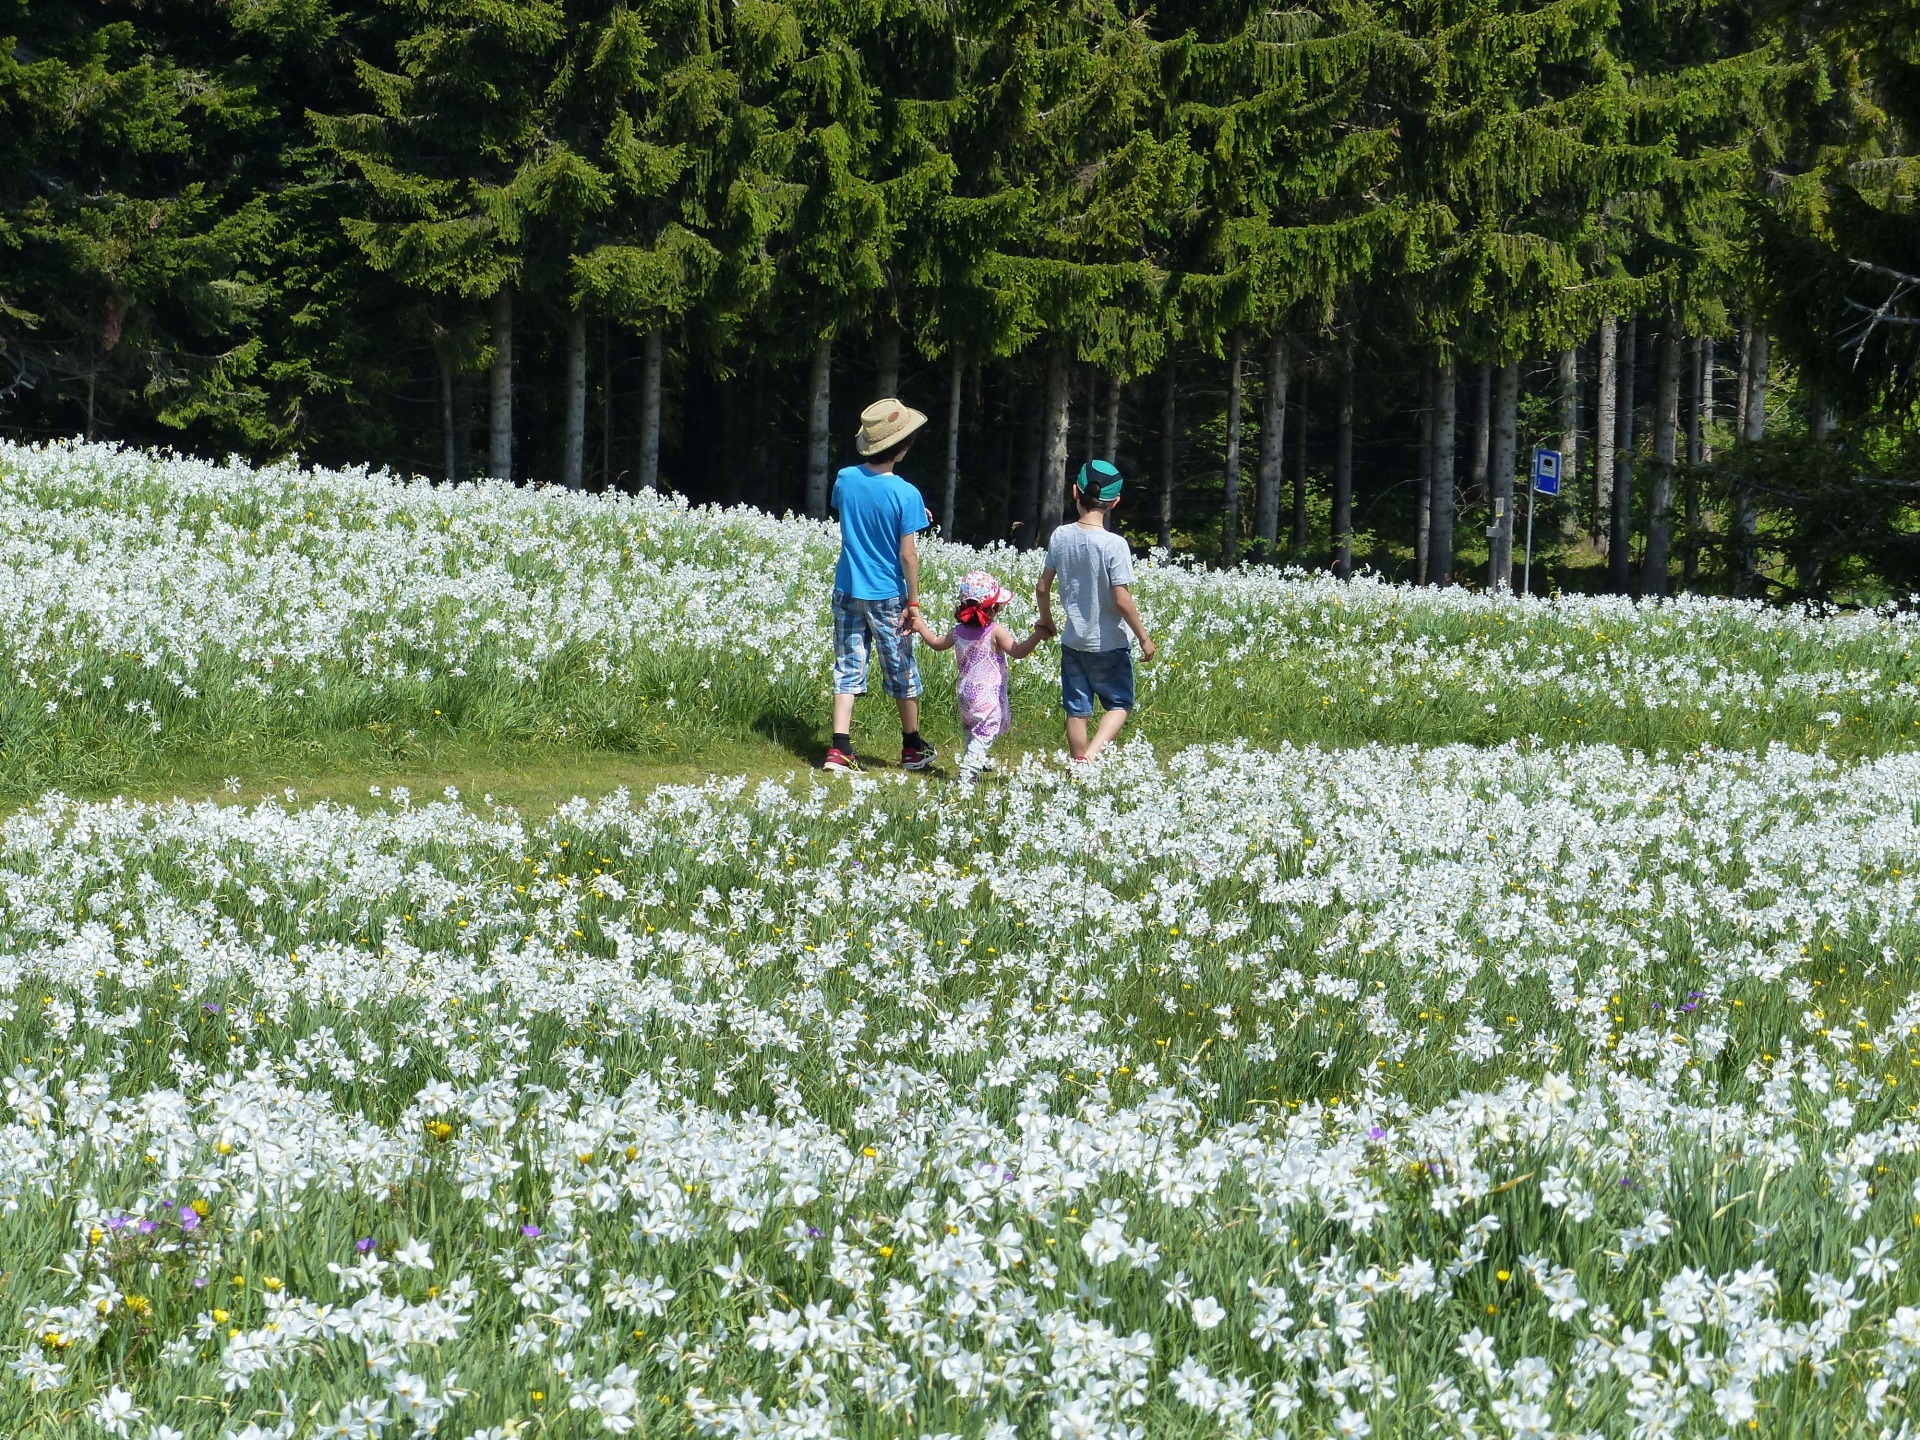 Spring flowers in Switzerland, spring hikes in switzerland, childfriendly spring hikes in switzerland